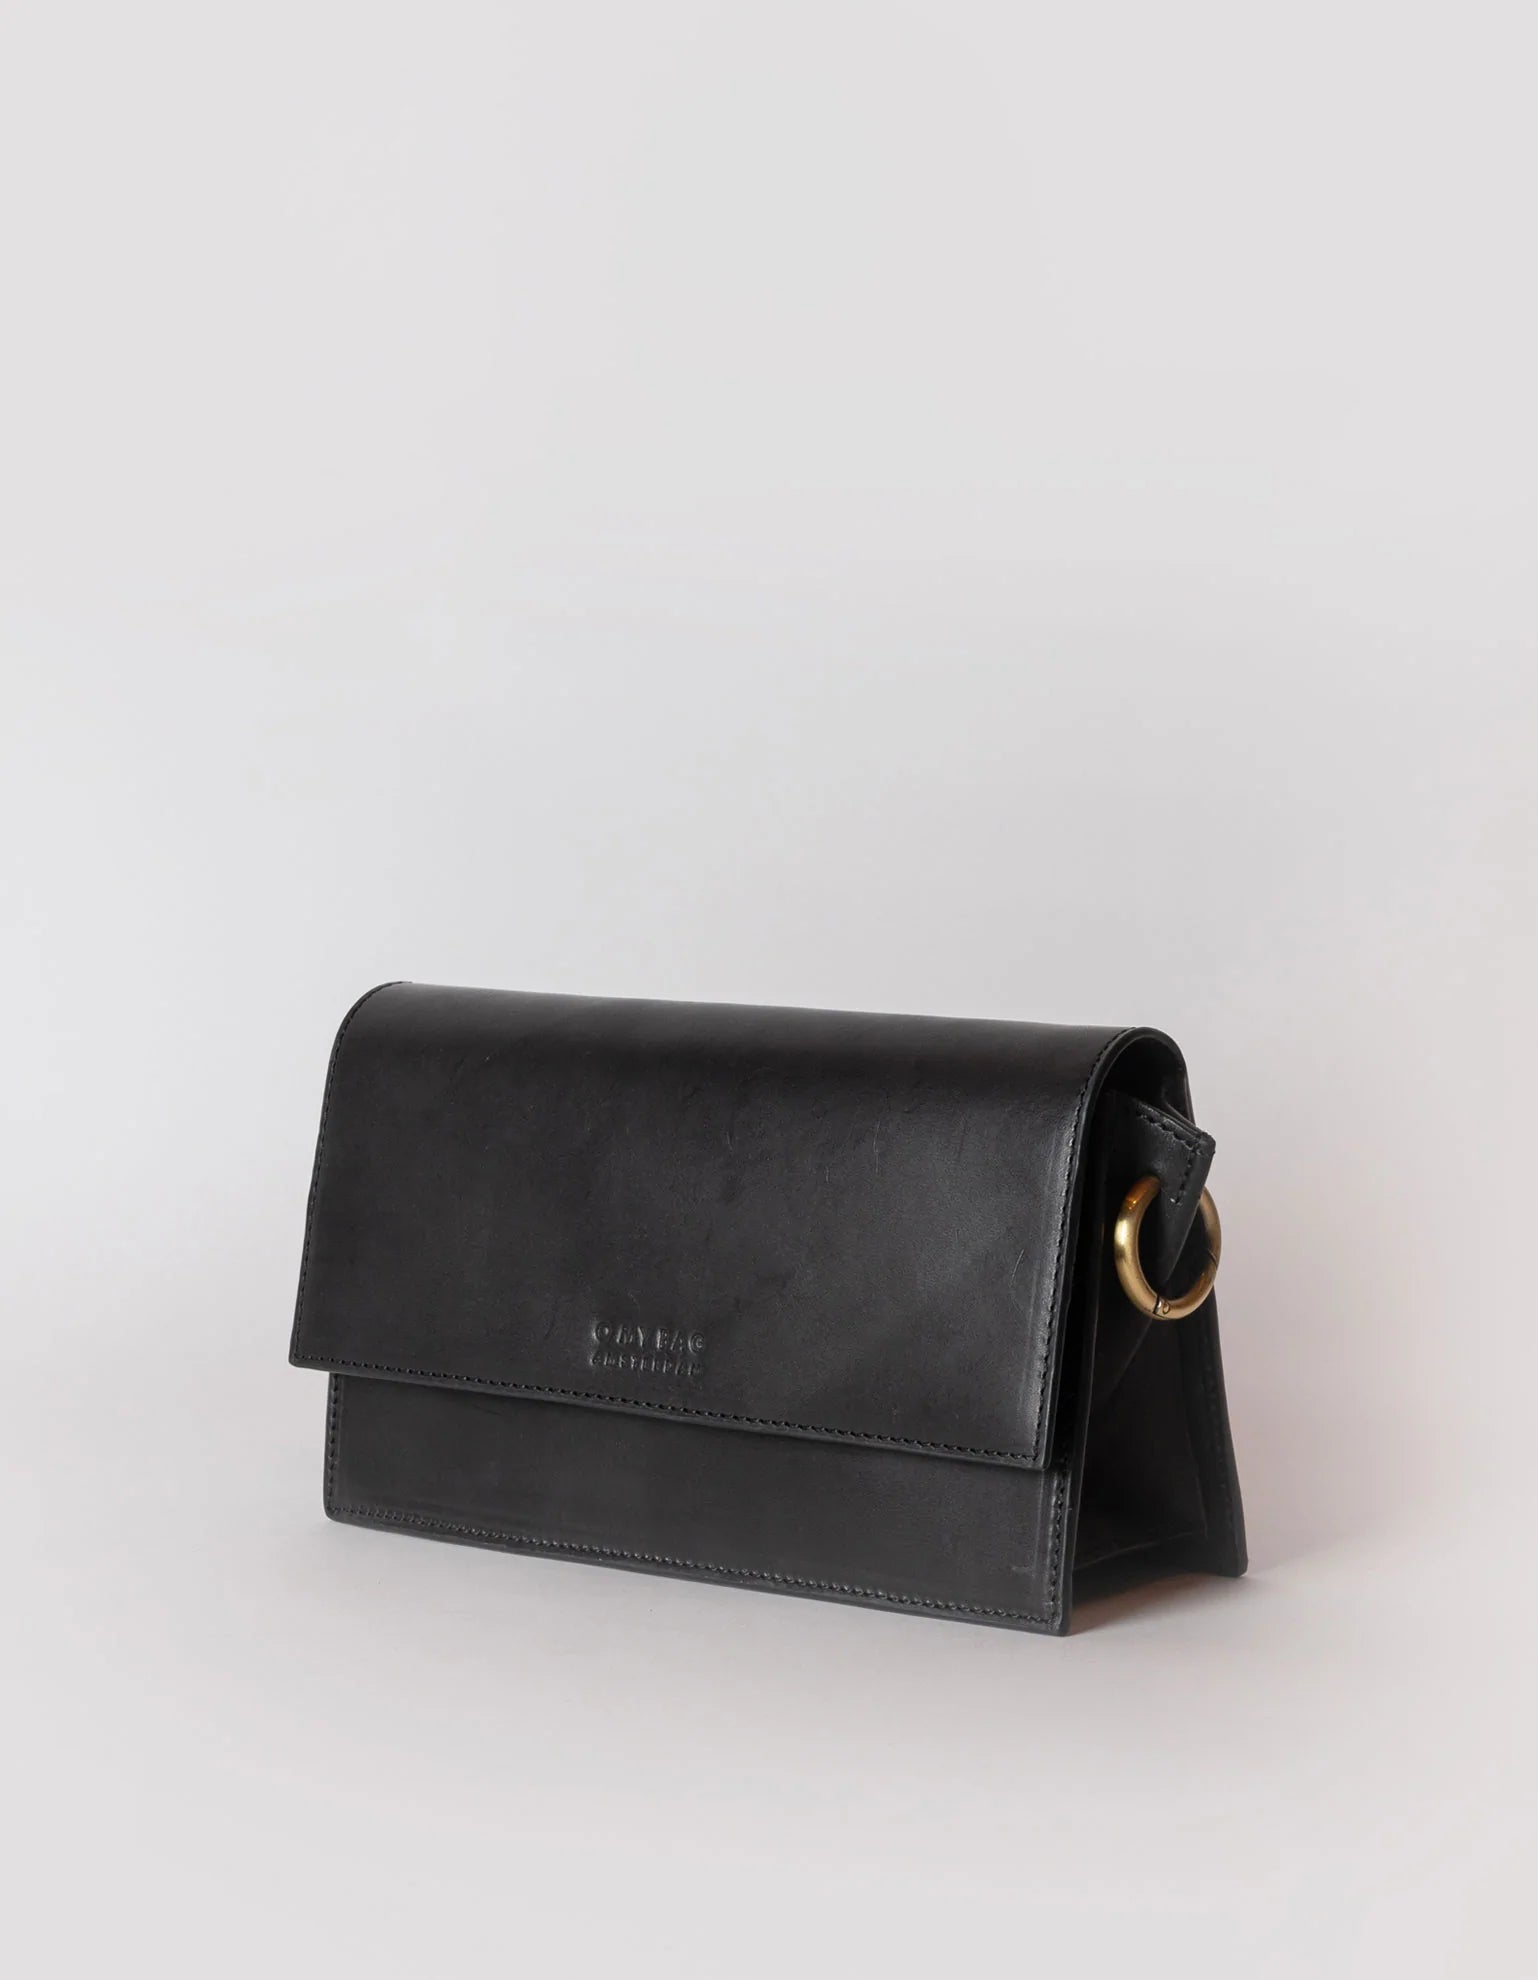 STELLA Bag | Black classic leather